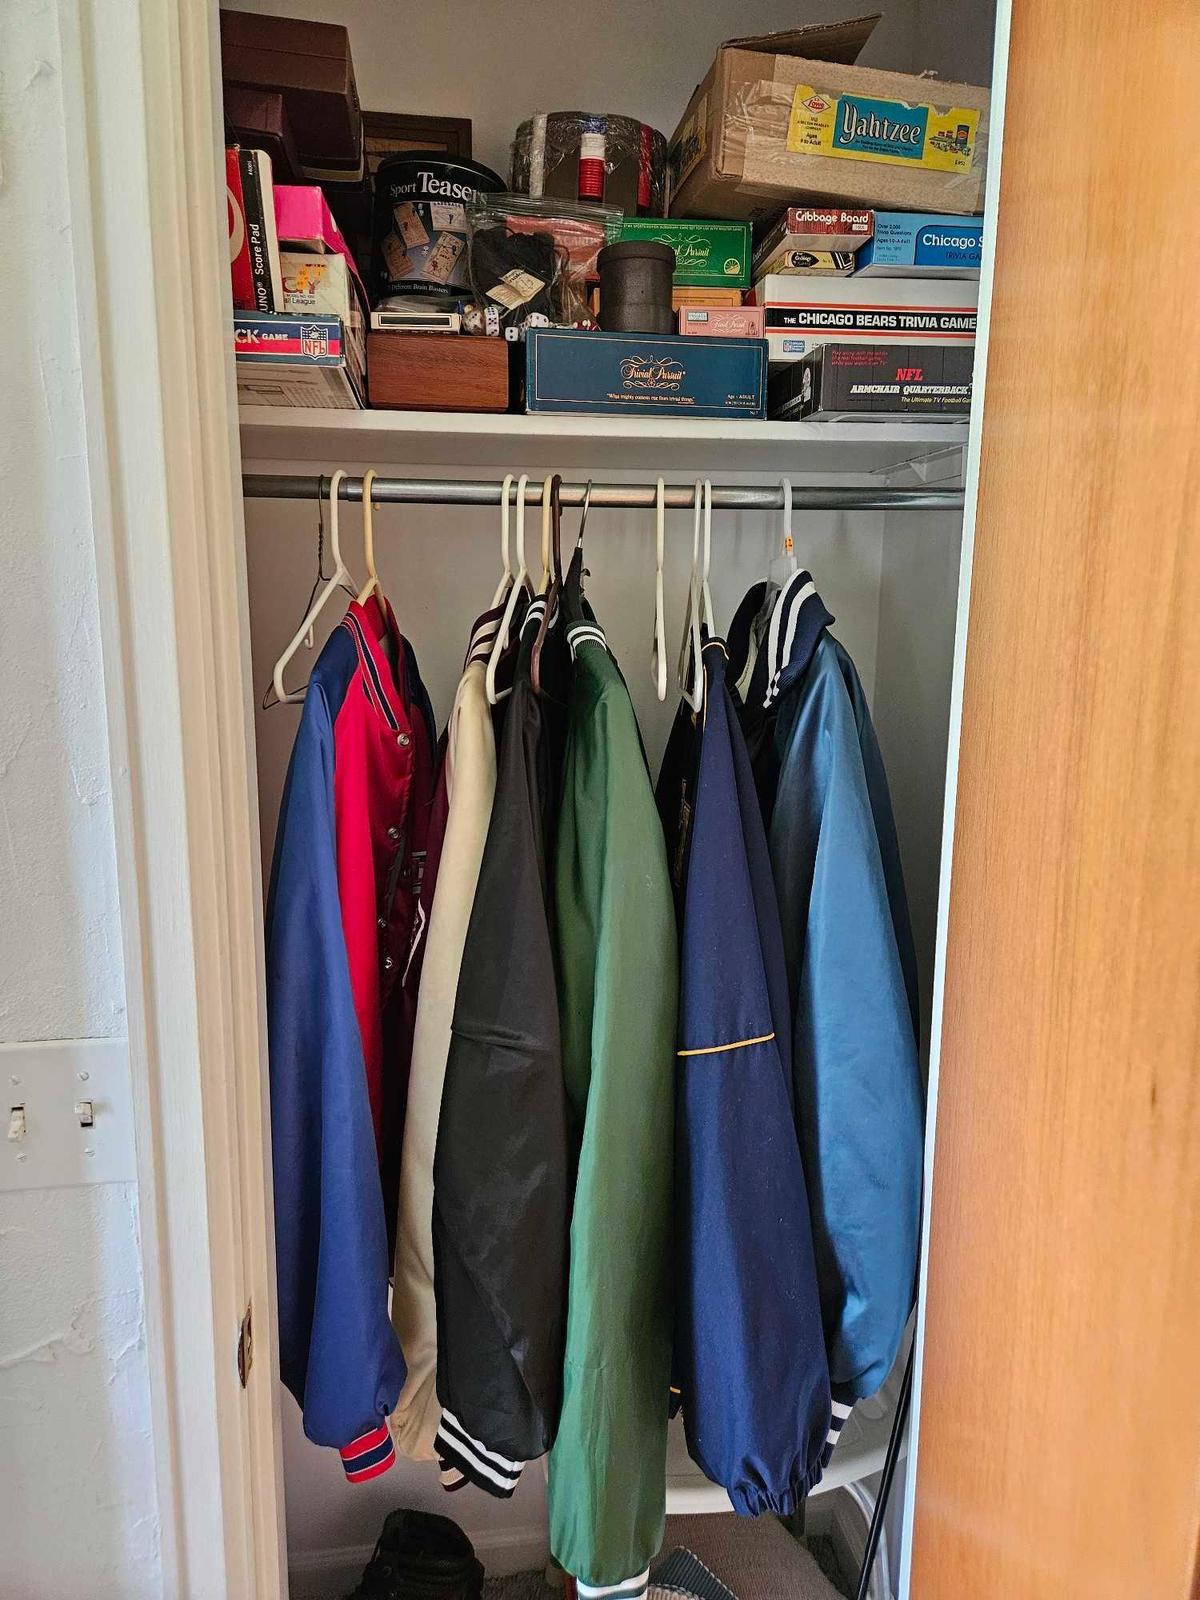 Contents of closet including games and Coats.